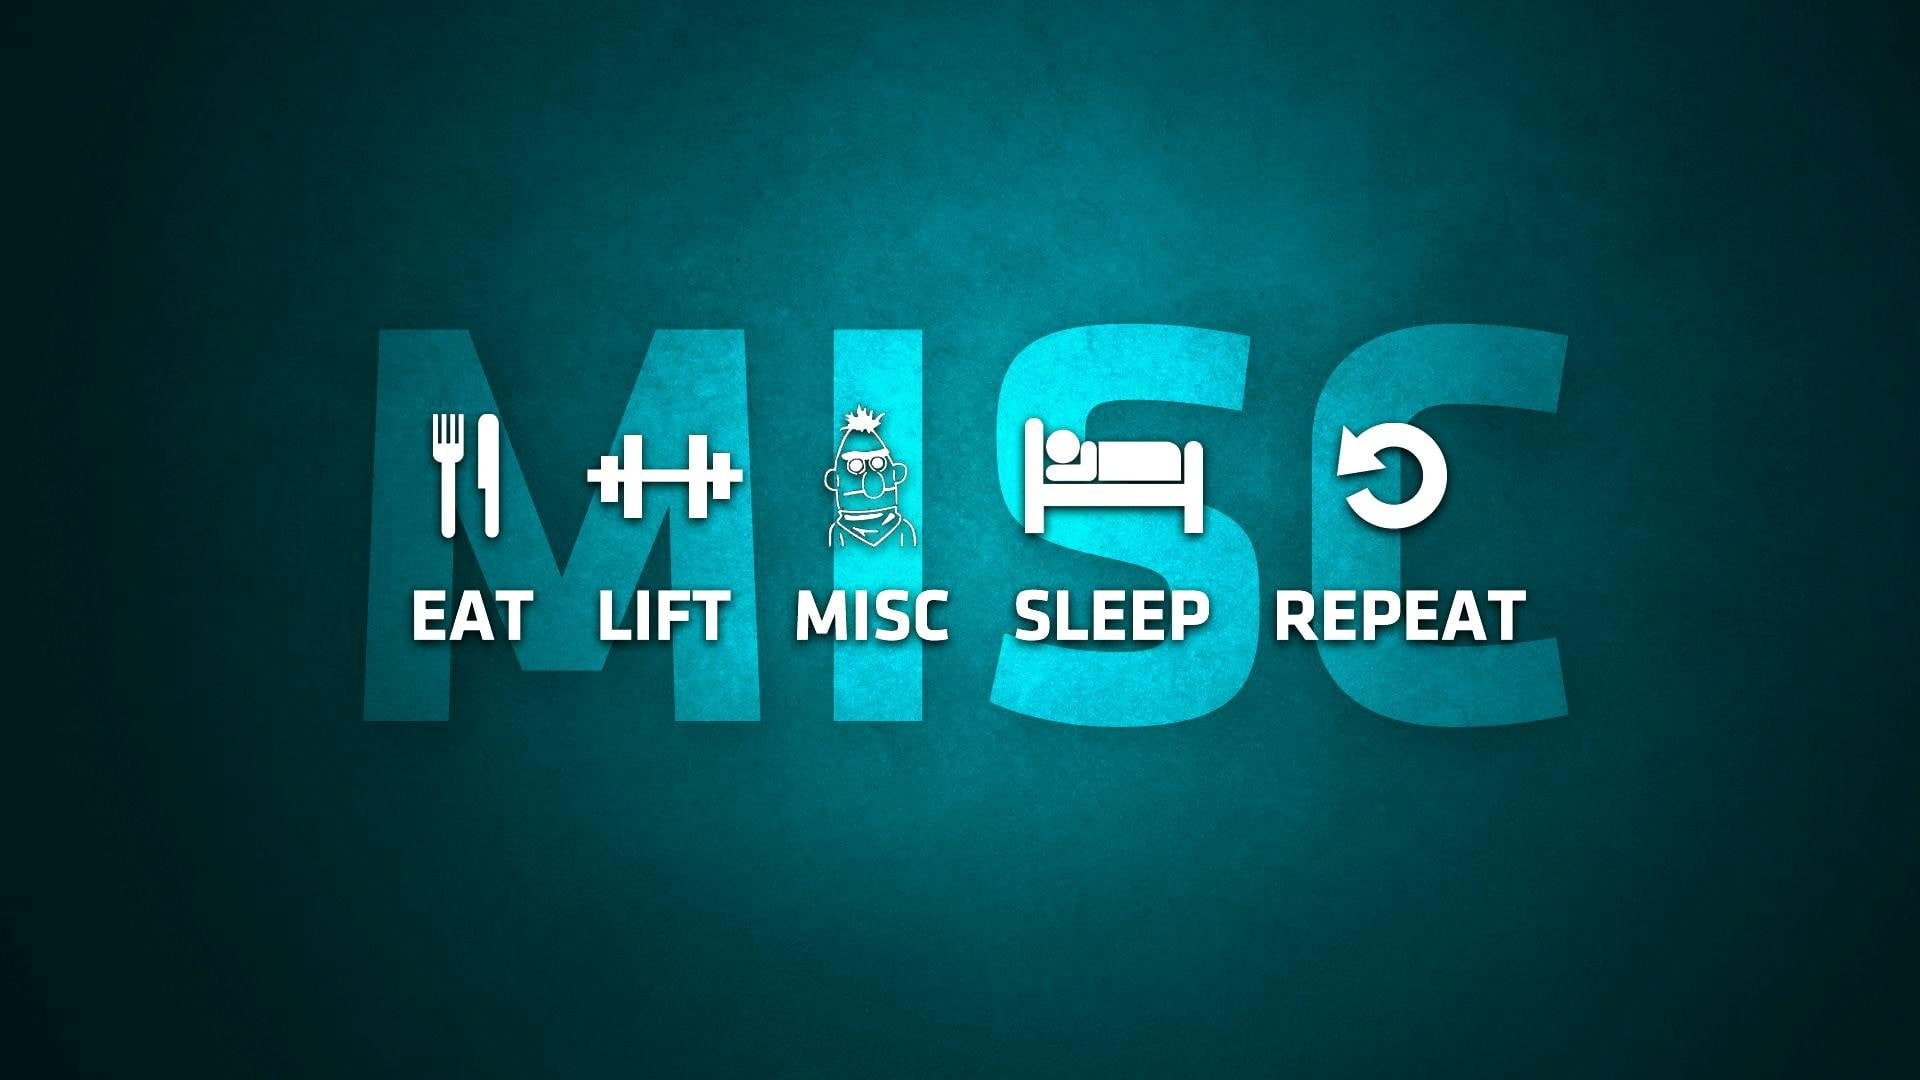 eat, lift, misc, repeat, sleep